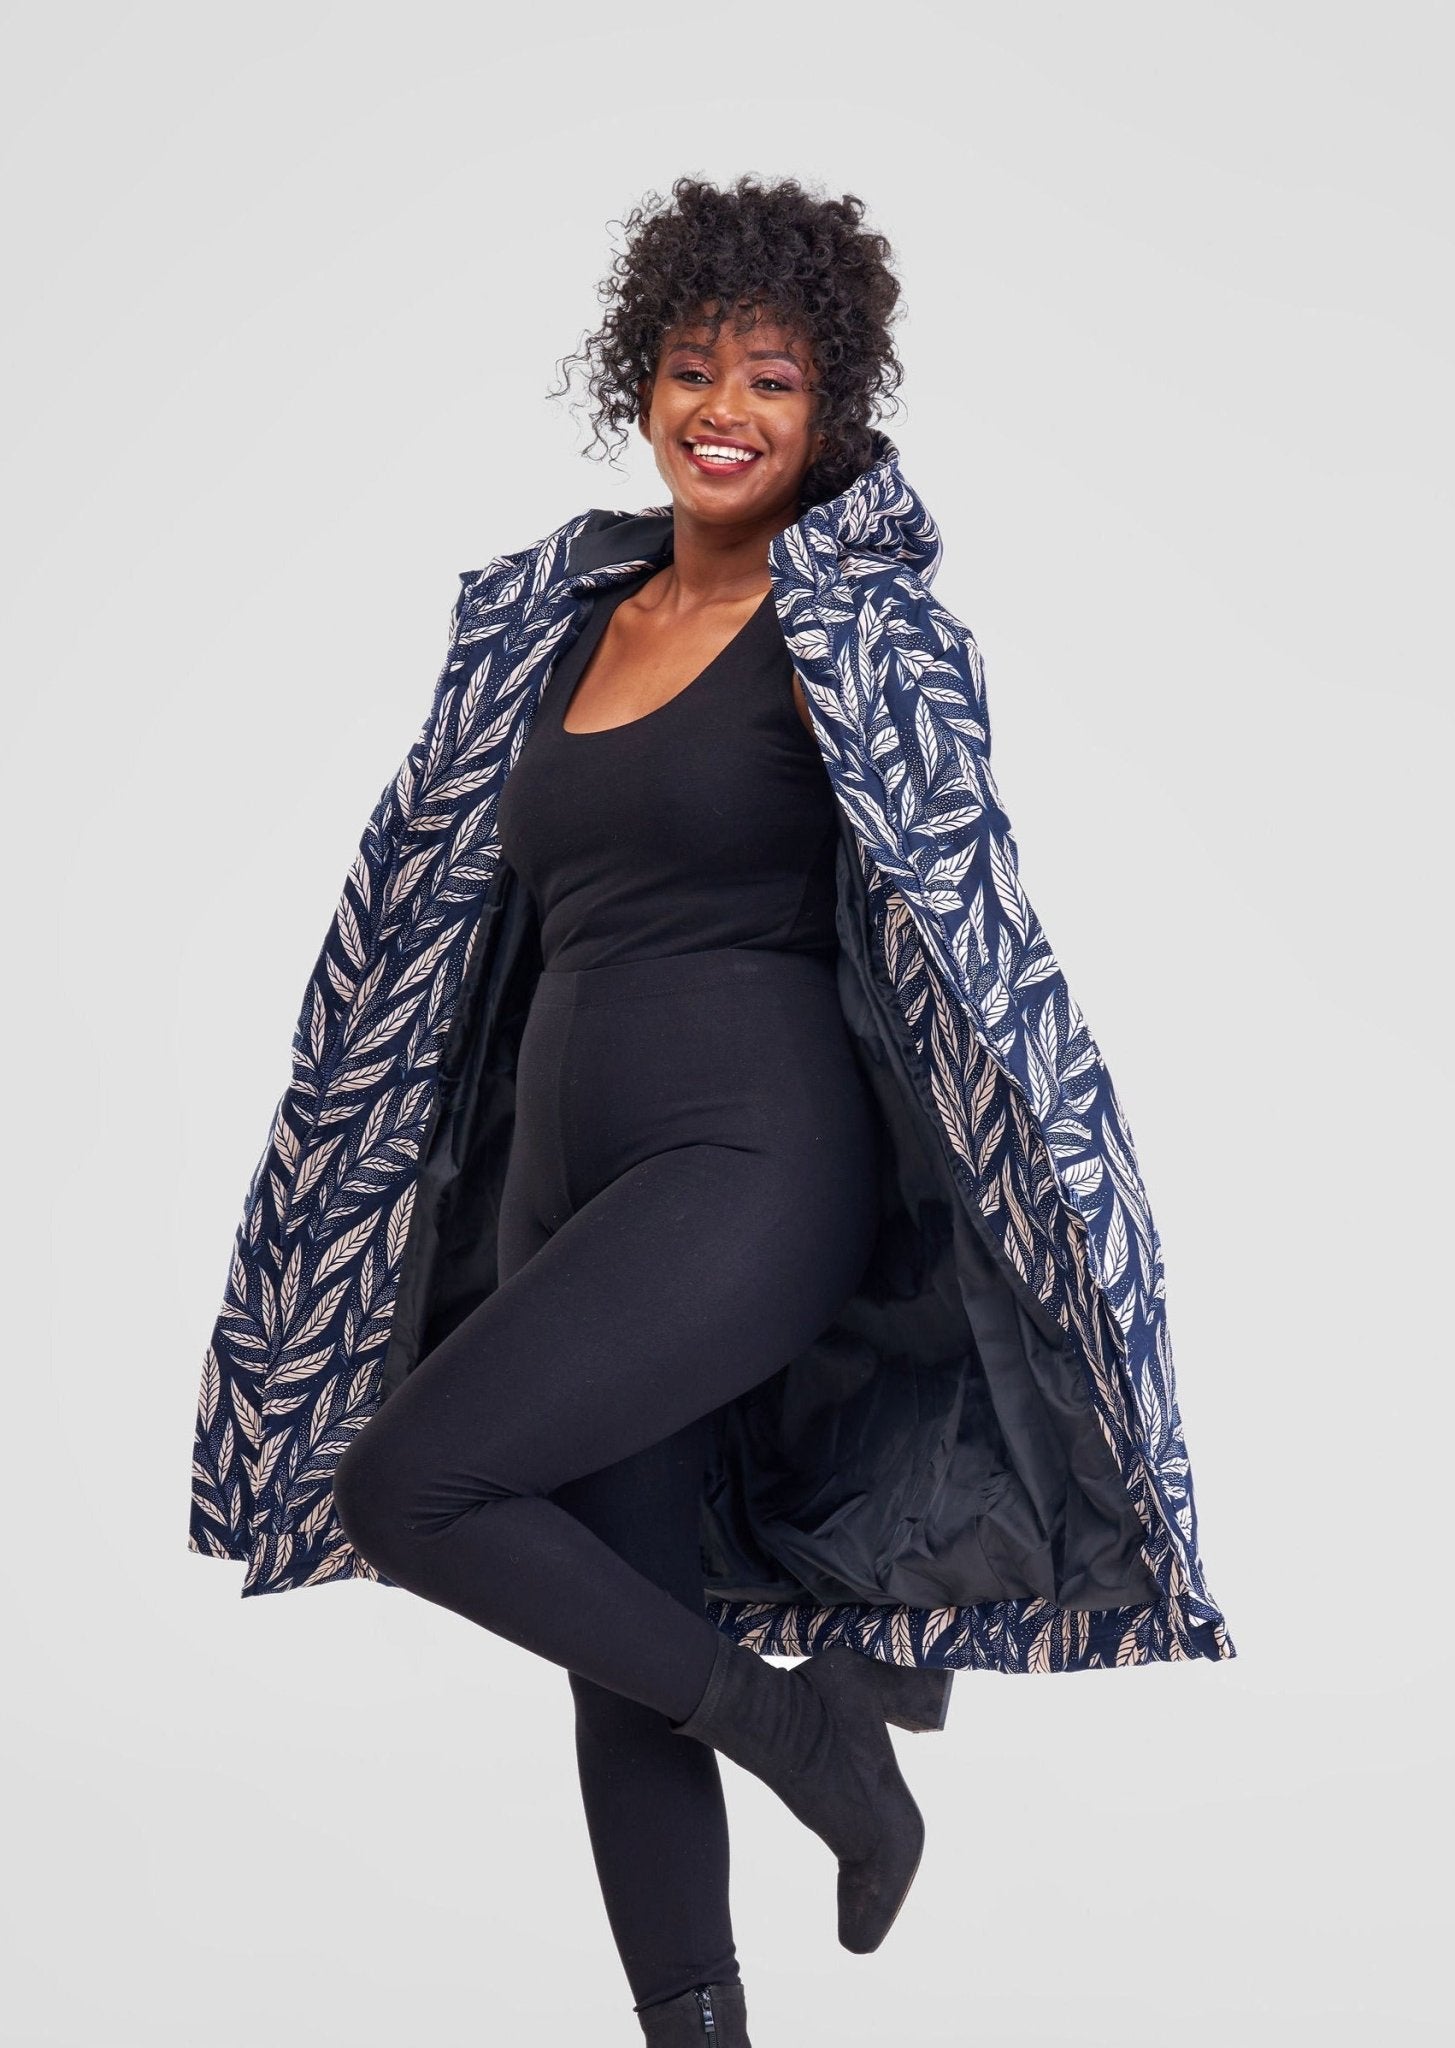 Wintermantel ‚Mwangaza‘ lang für 90 € - mikono.africa Jacken aus Kenia bunte Bomberjacke Partyjacke faire sozial nachhaltig designed in Kenia